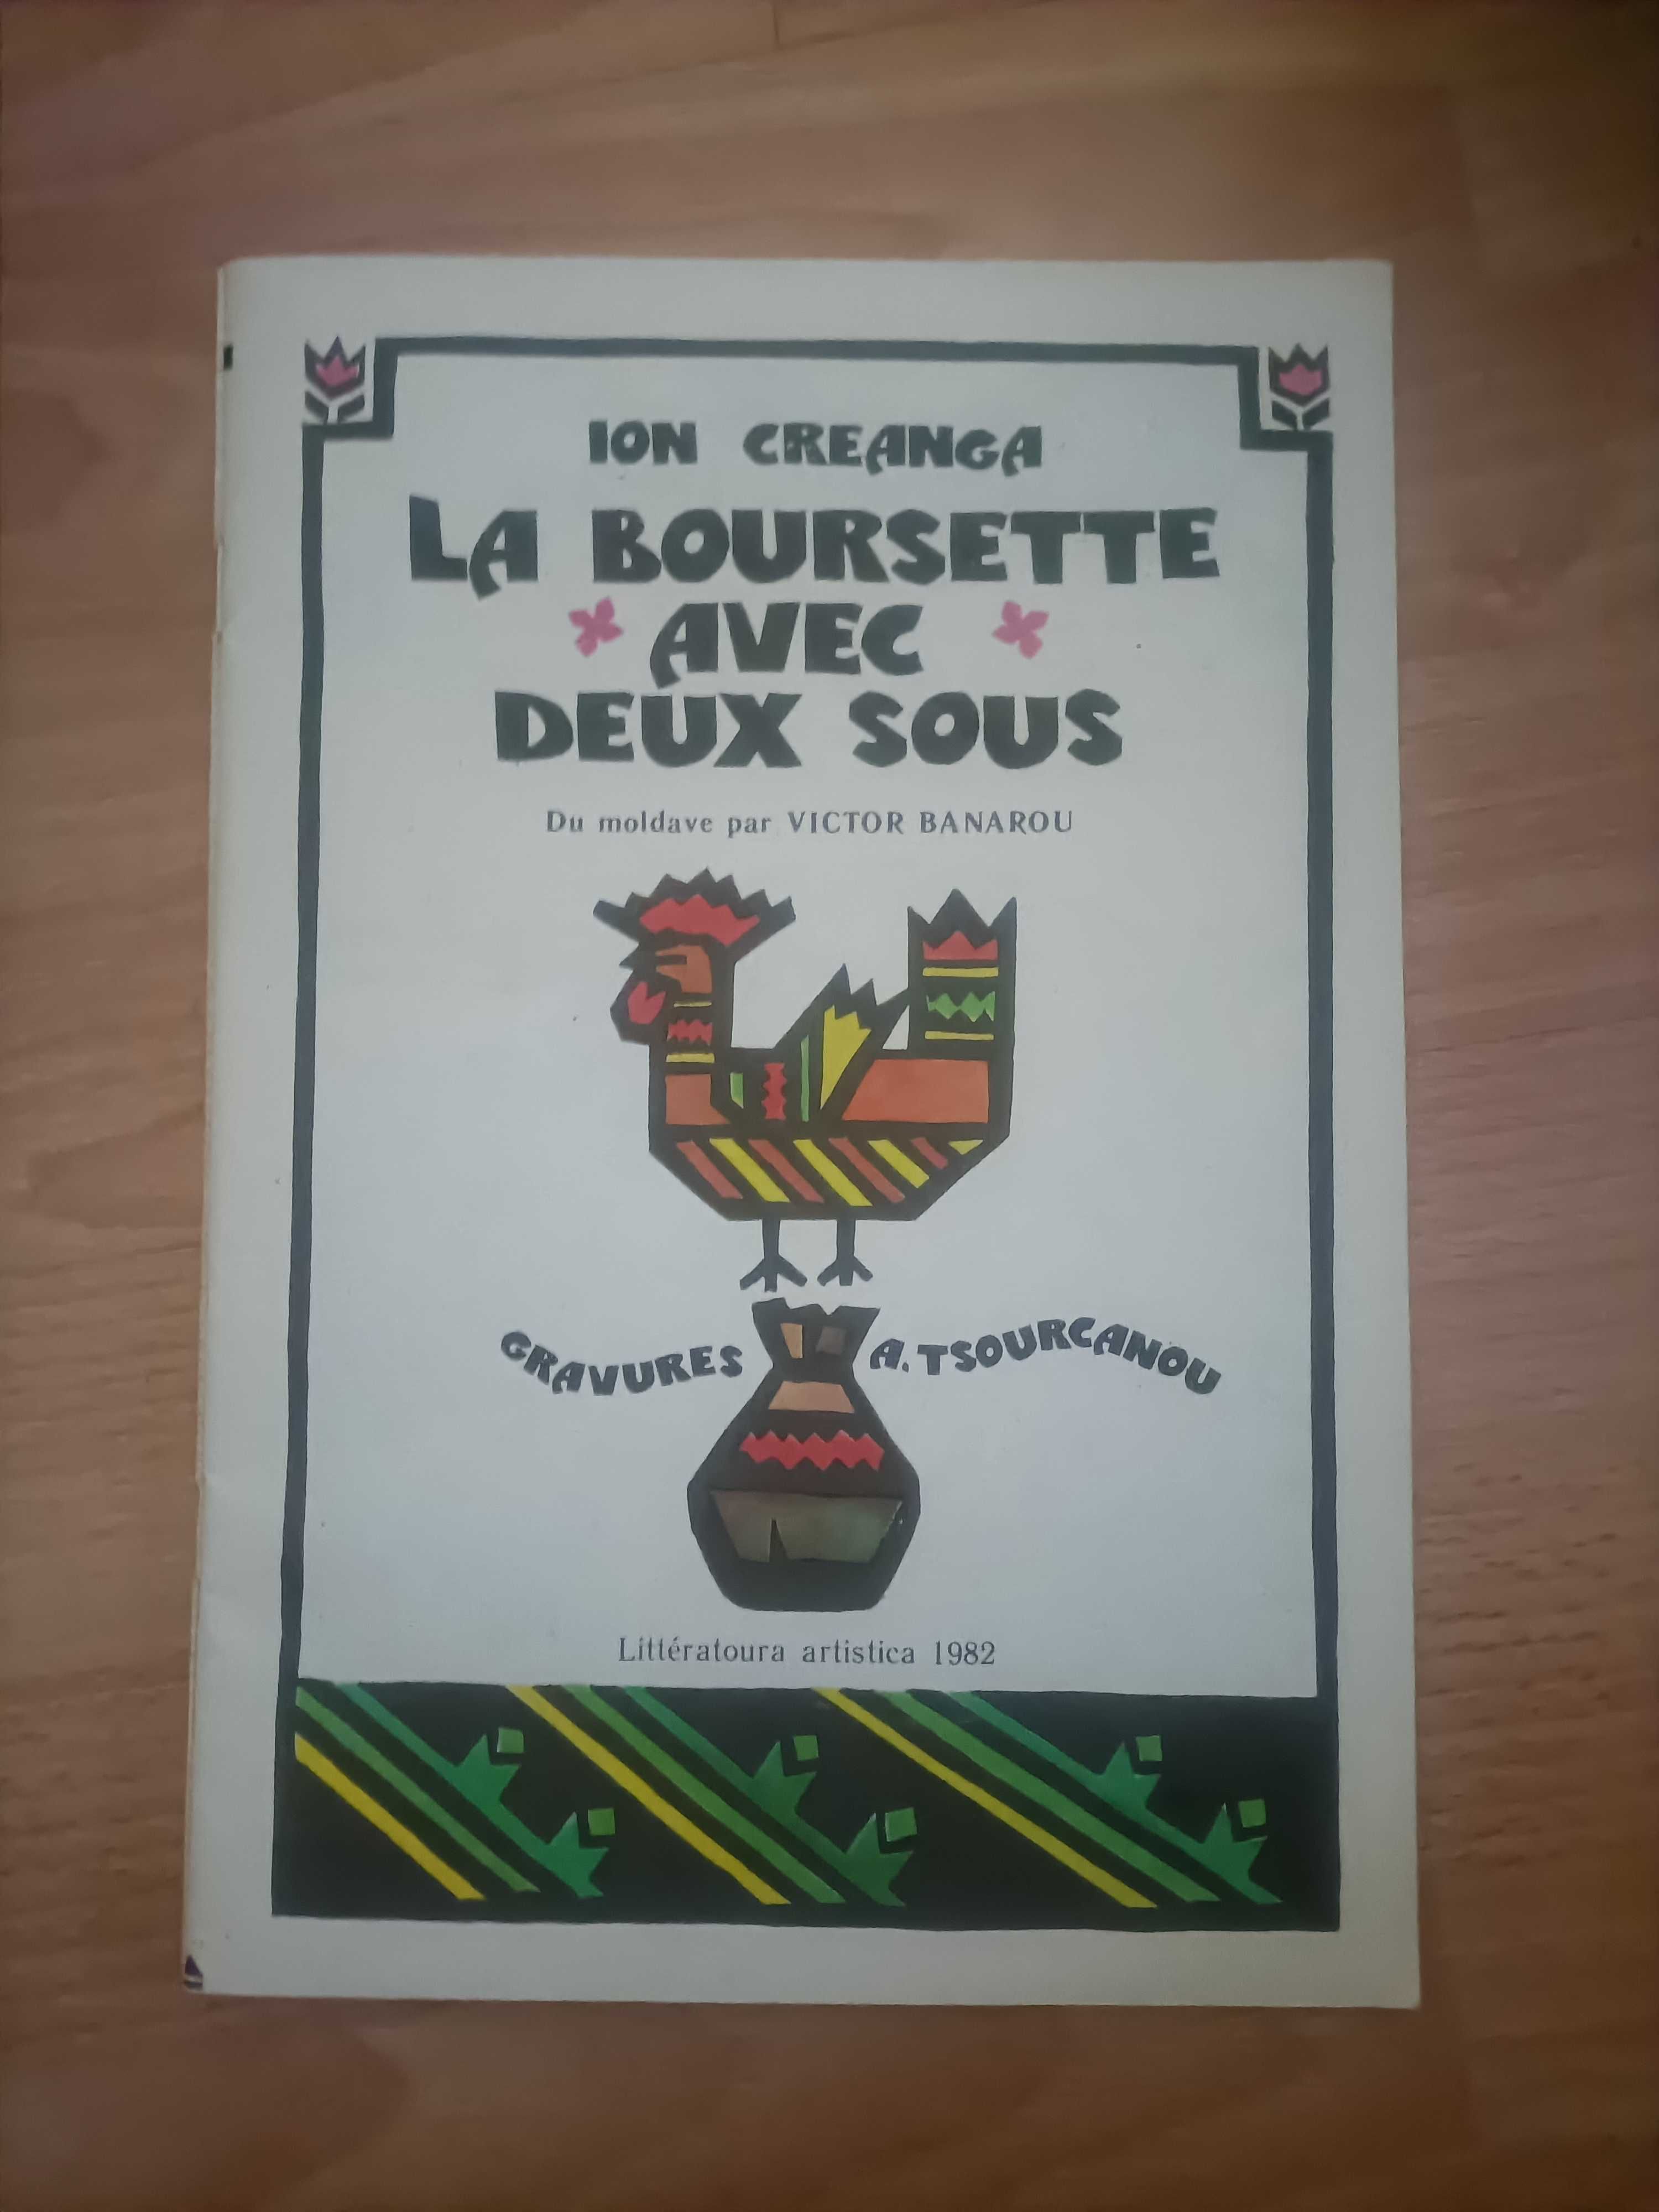 Ion Creanga La Boursette avec deux sous książka po francusku